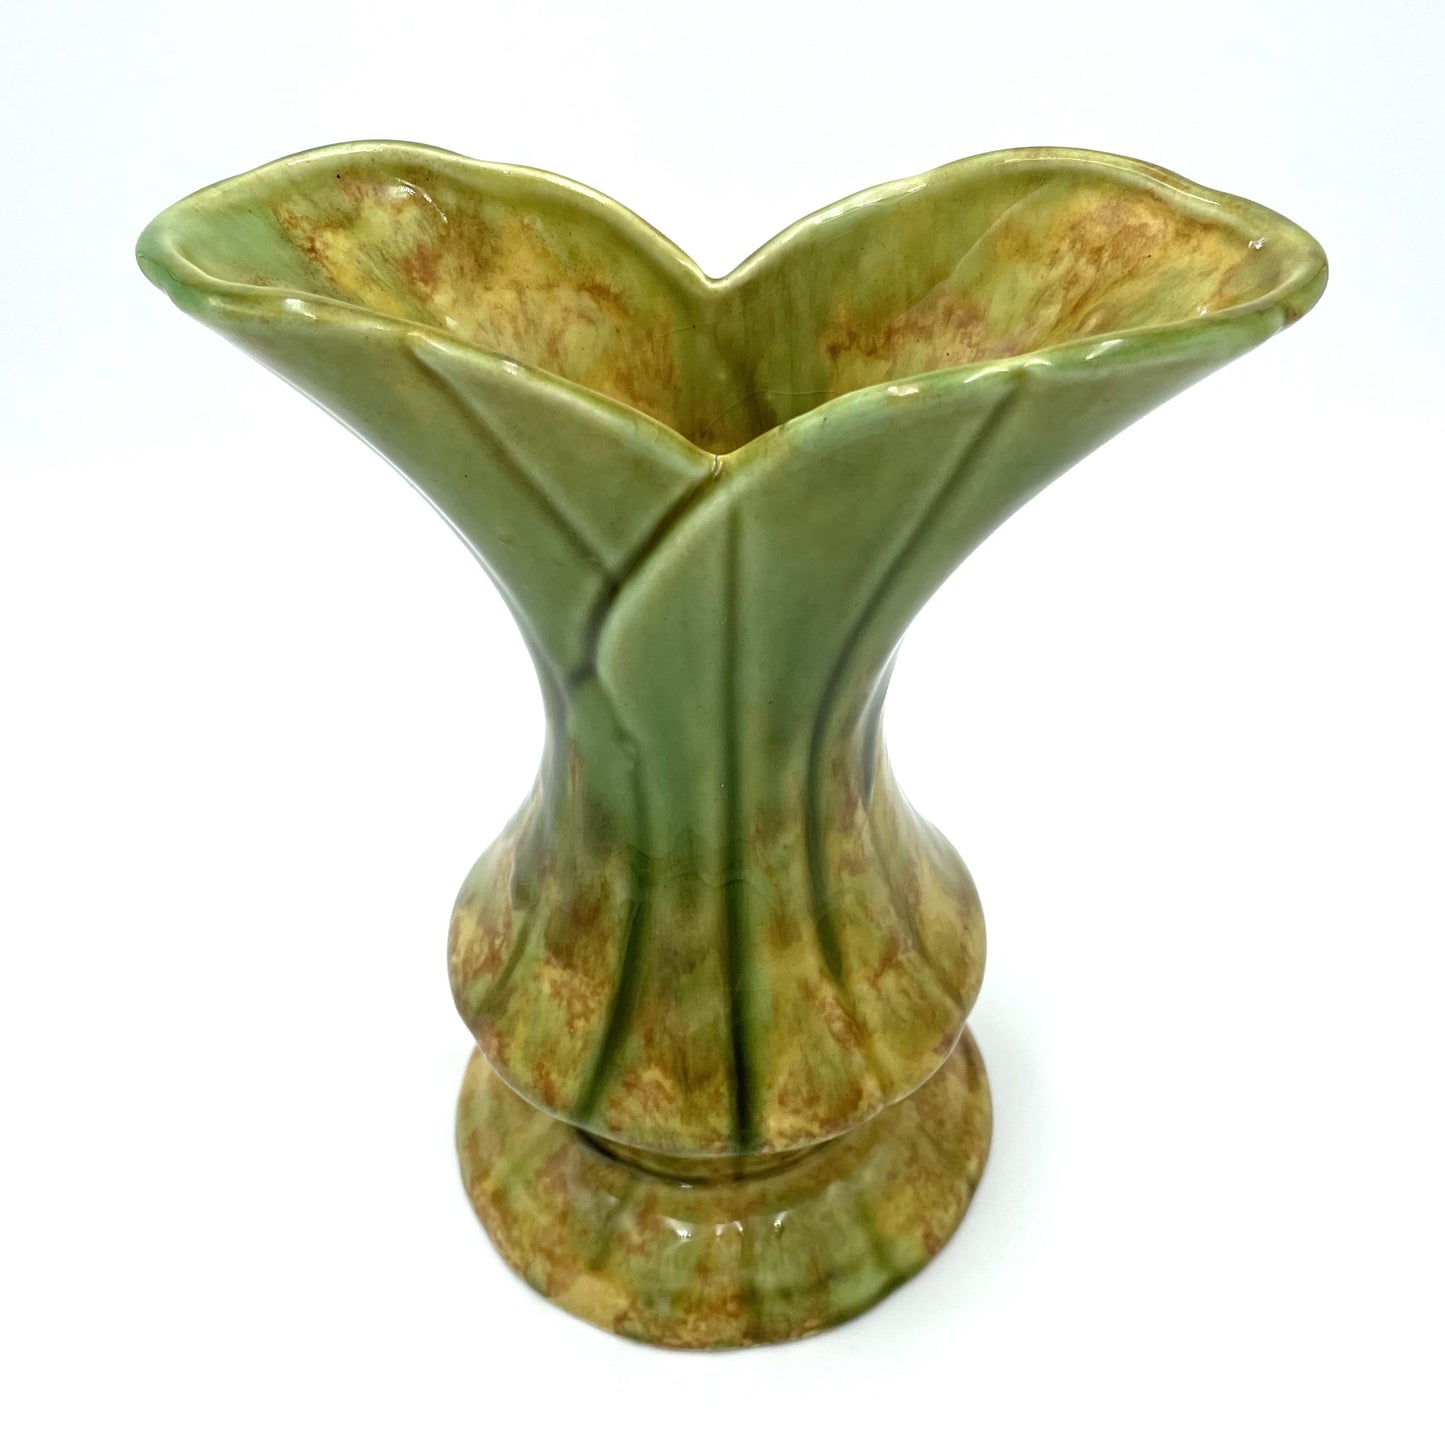 Diana Ware Green & Yellow Pottery Vase - 20cm